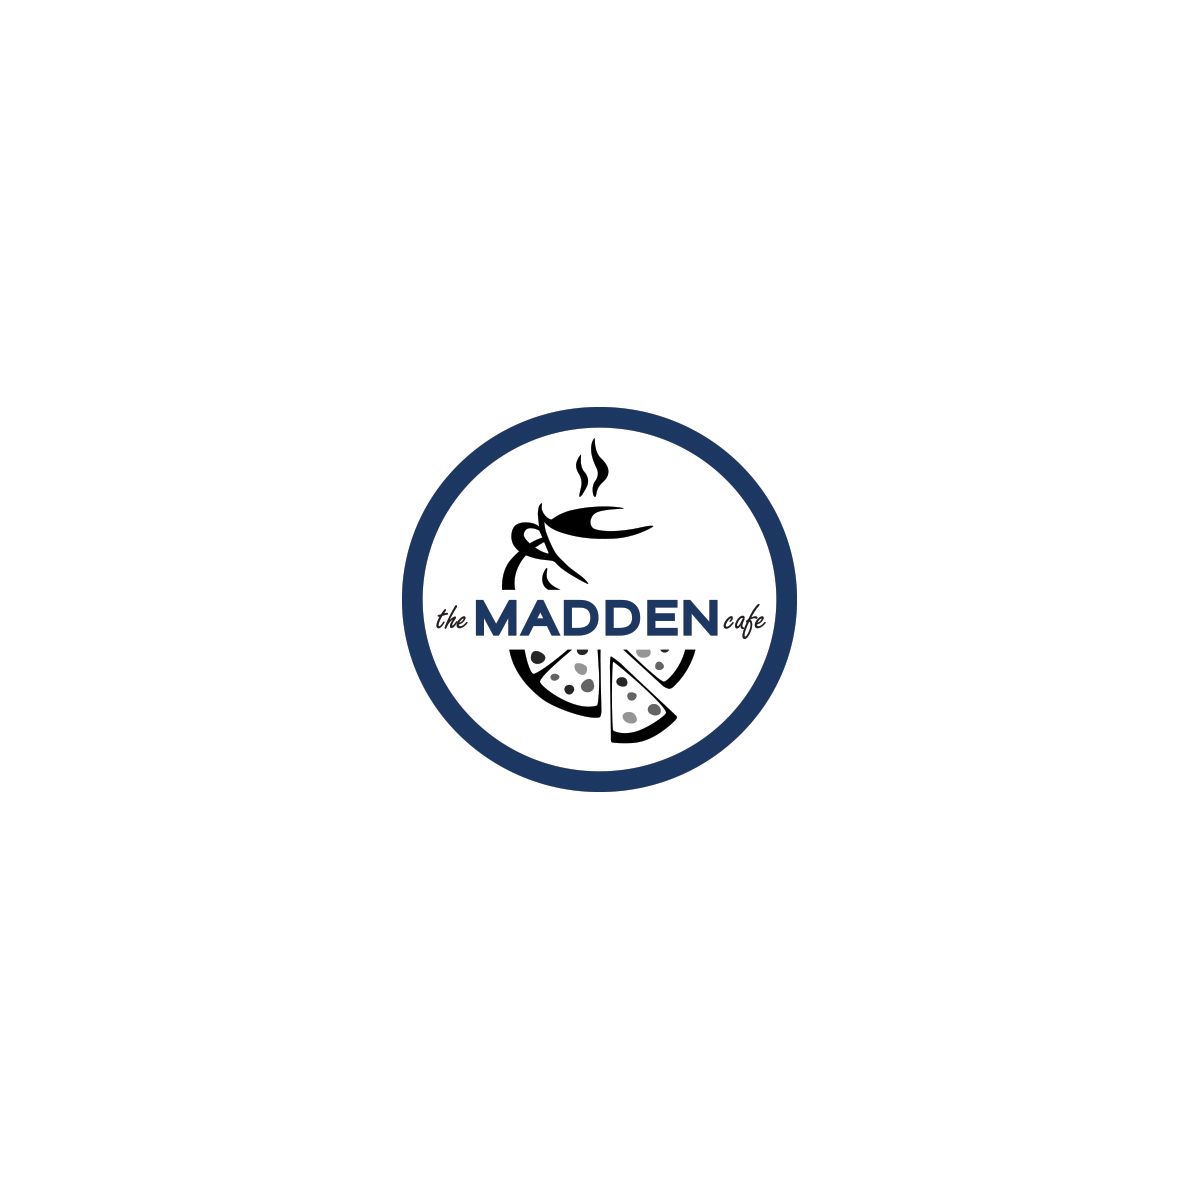 THE MADDEN CAFE - Logo